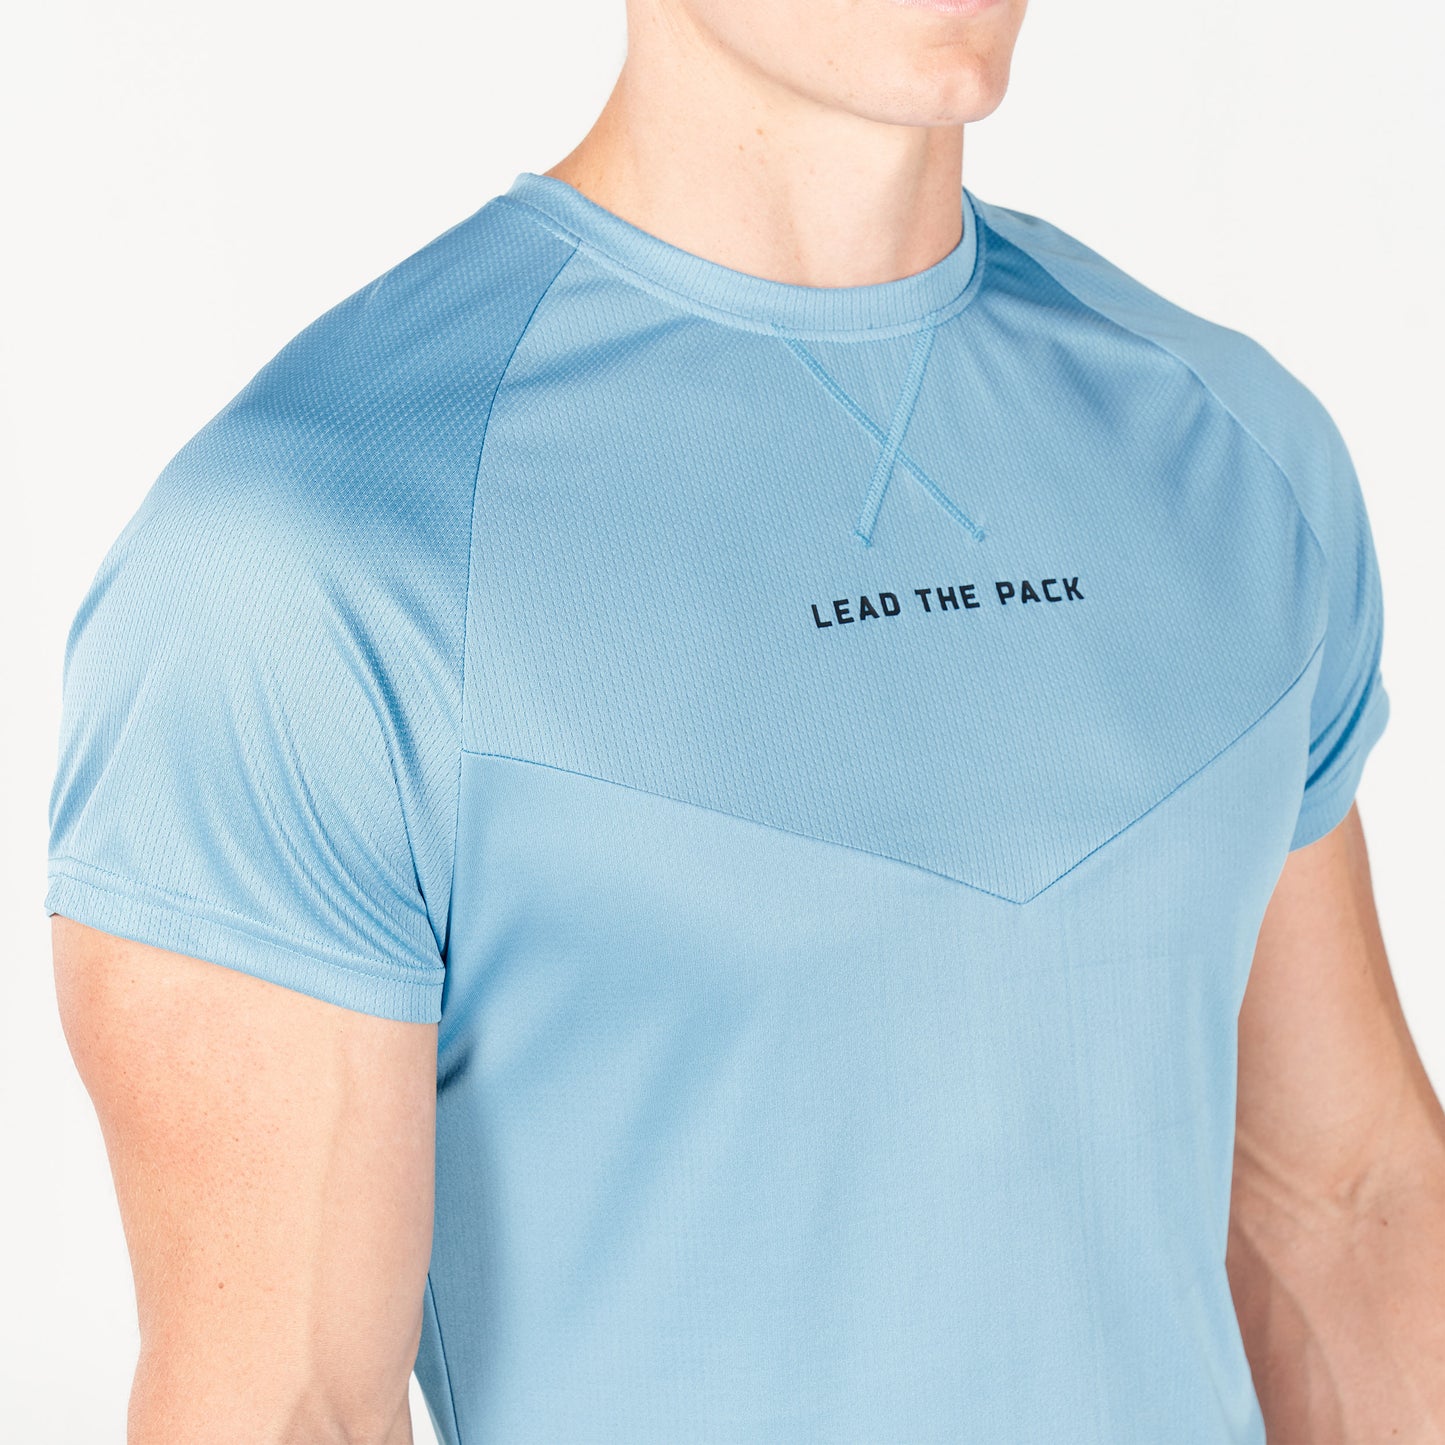 squatwolf-gym-wear-statement-dryflex-tee-delph-blue-workout-shirts-for-men